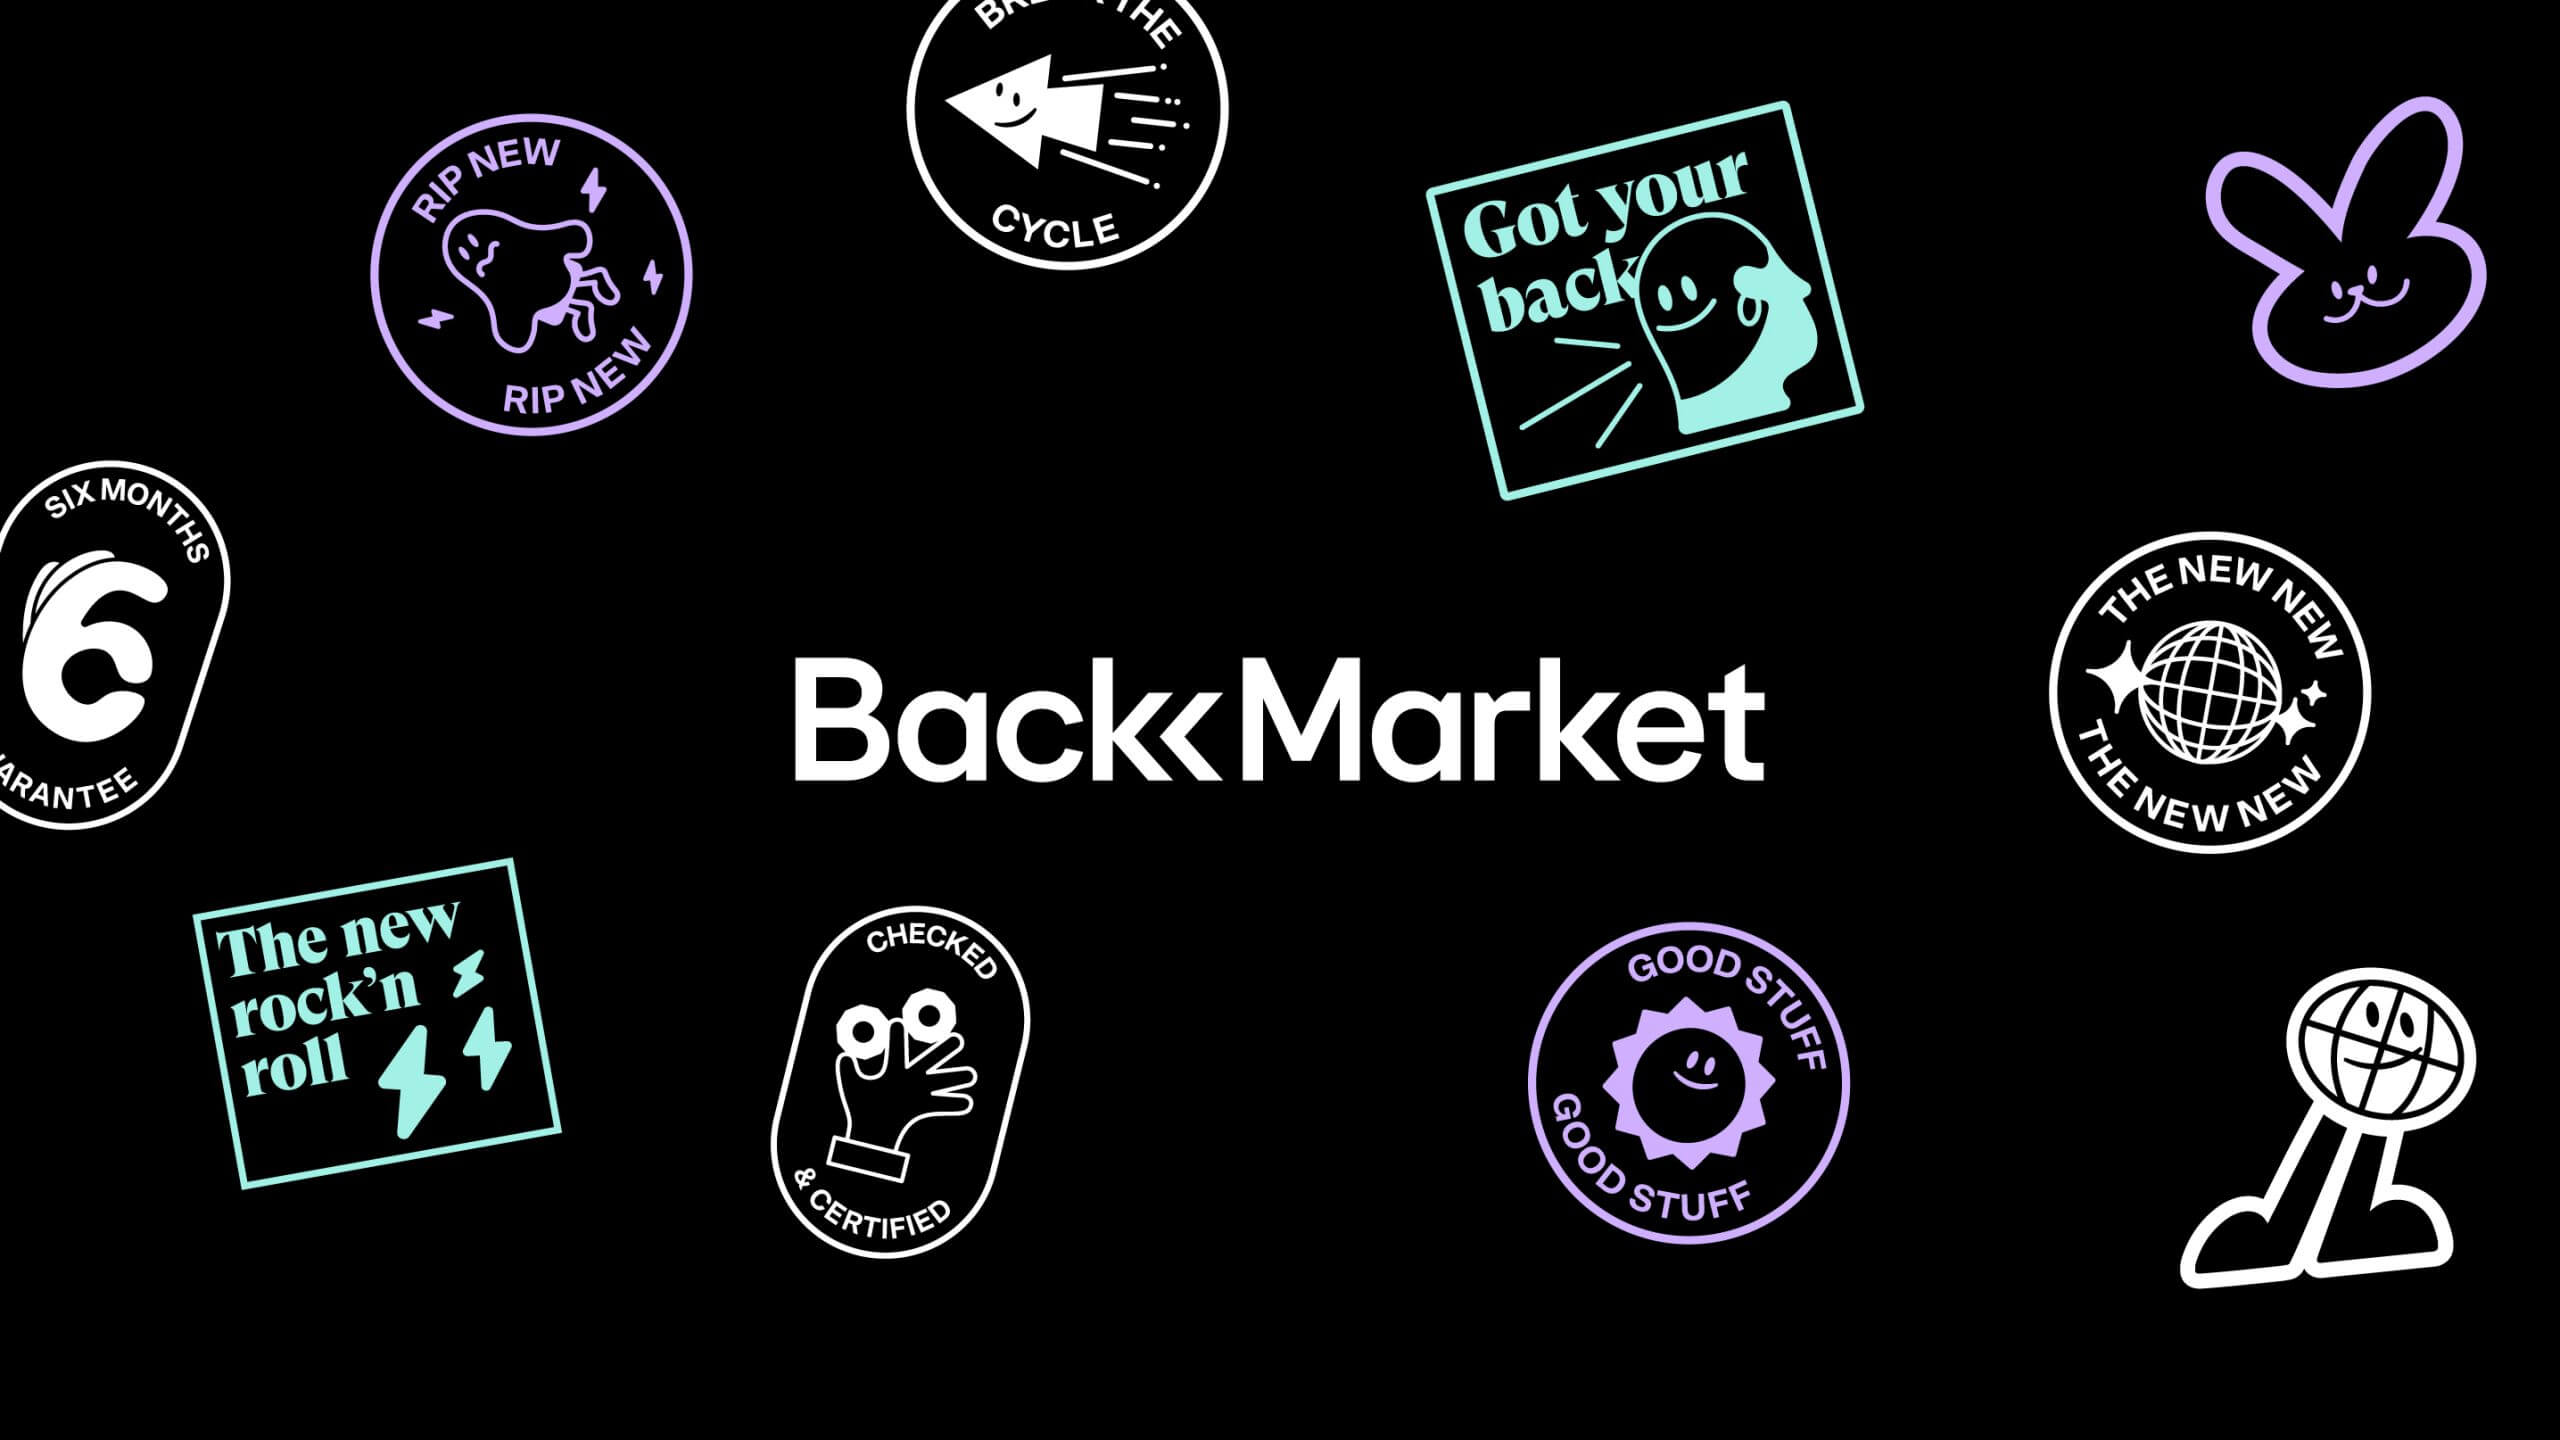 Back Market: Your Go-To Destination for Refurbished Electronics